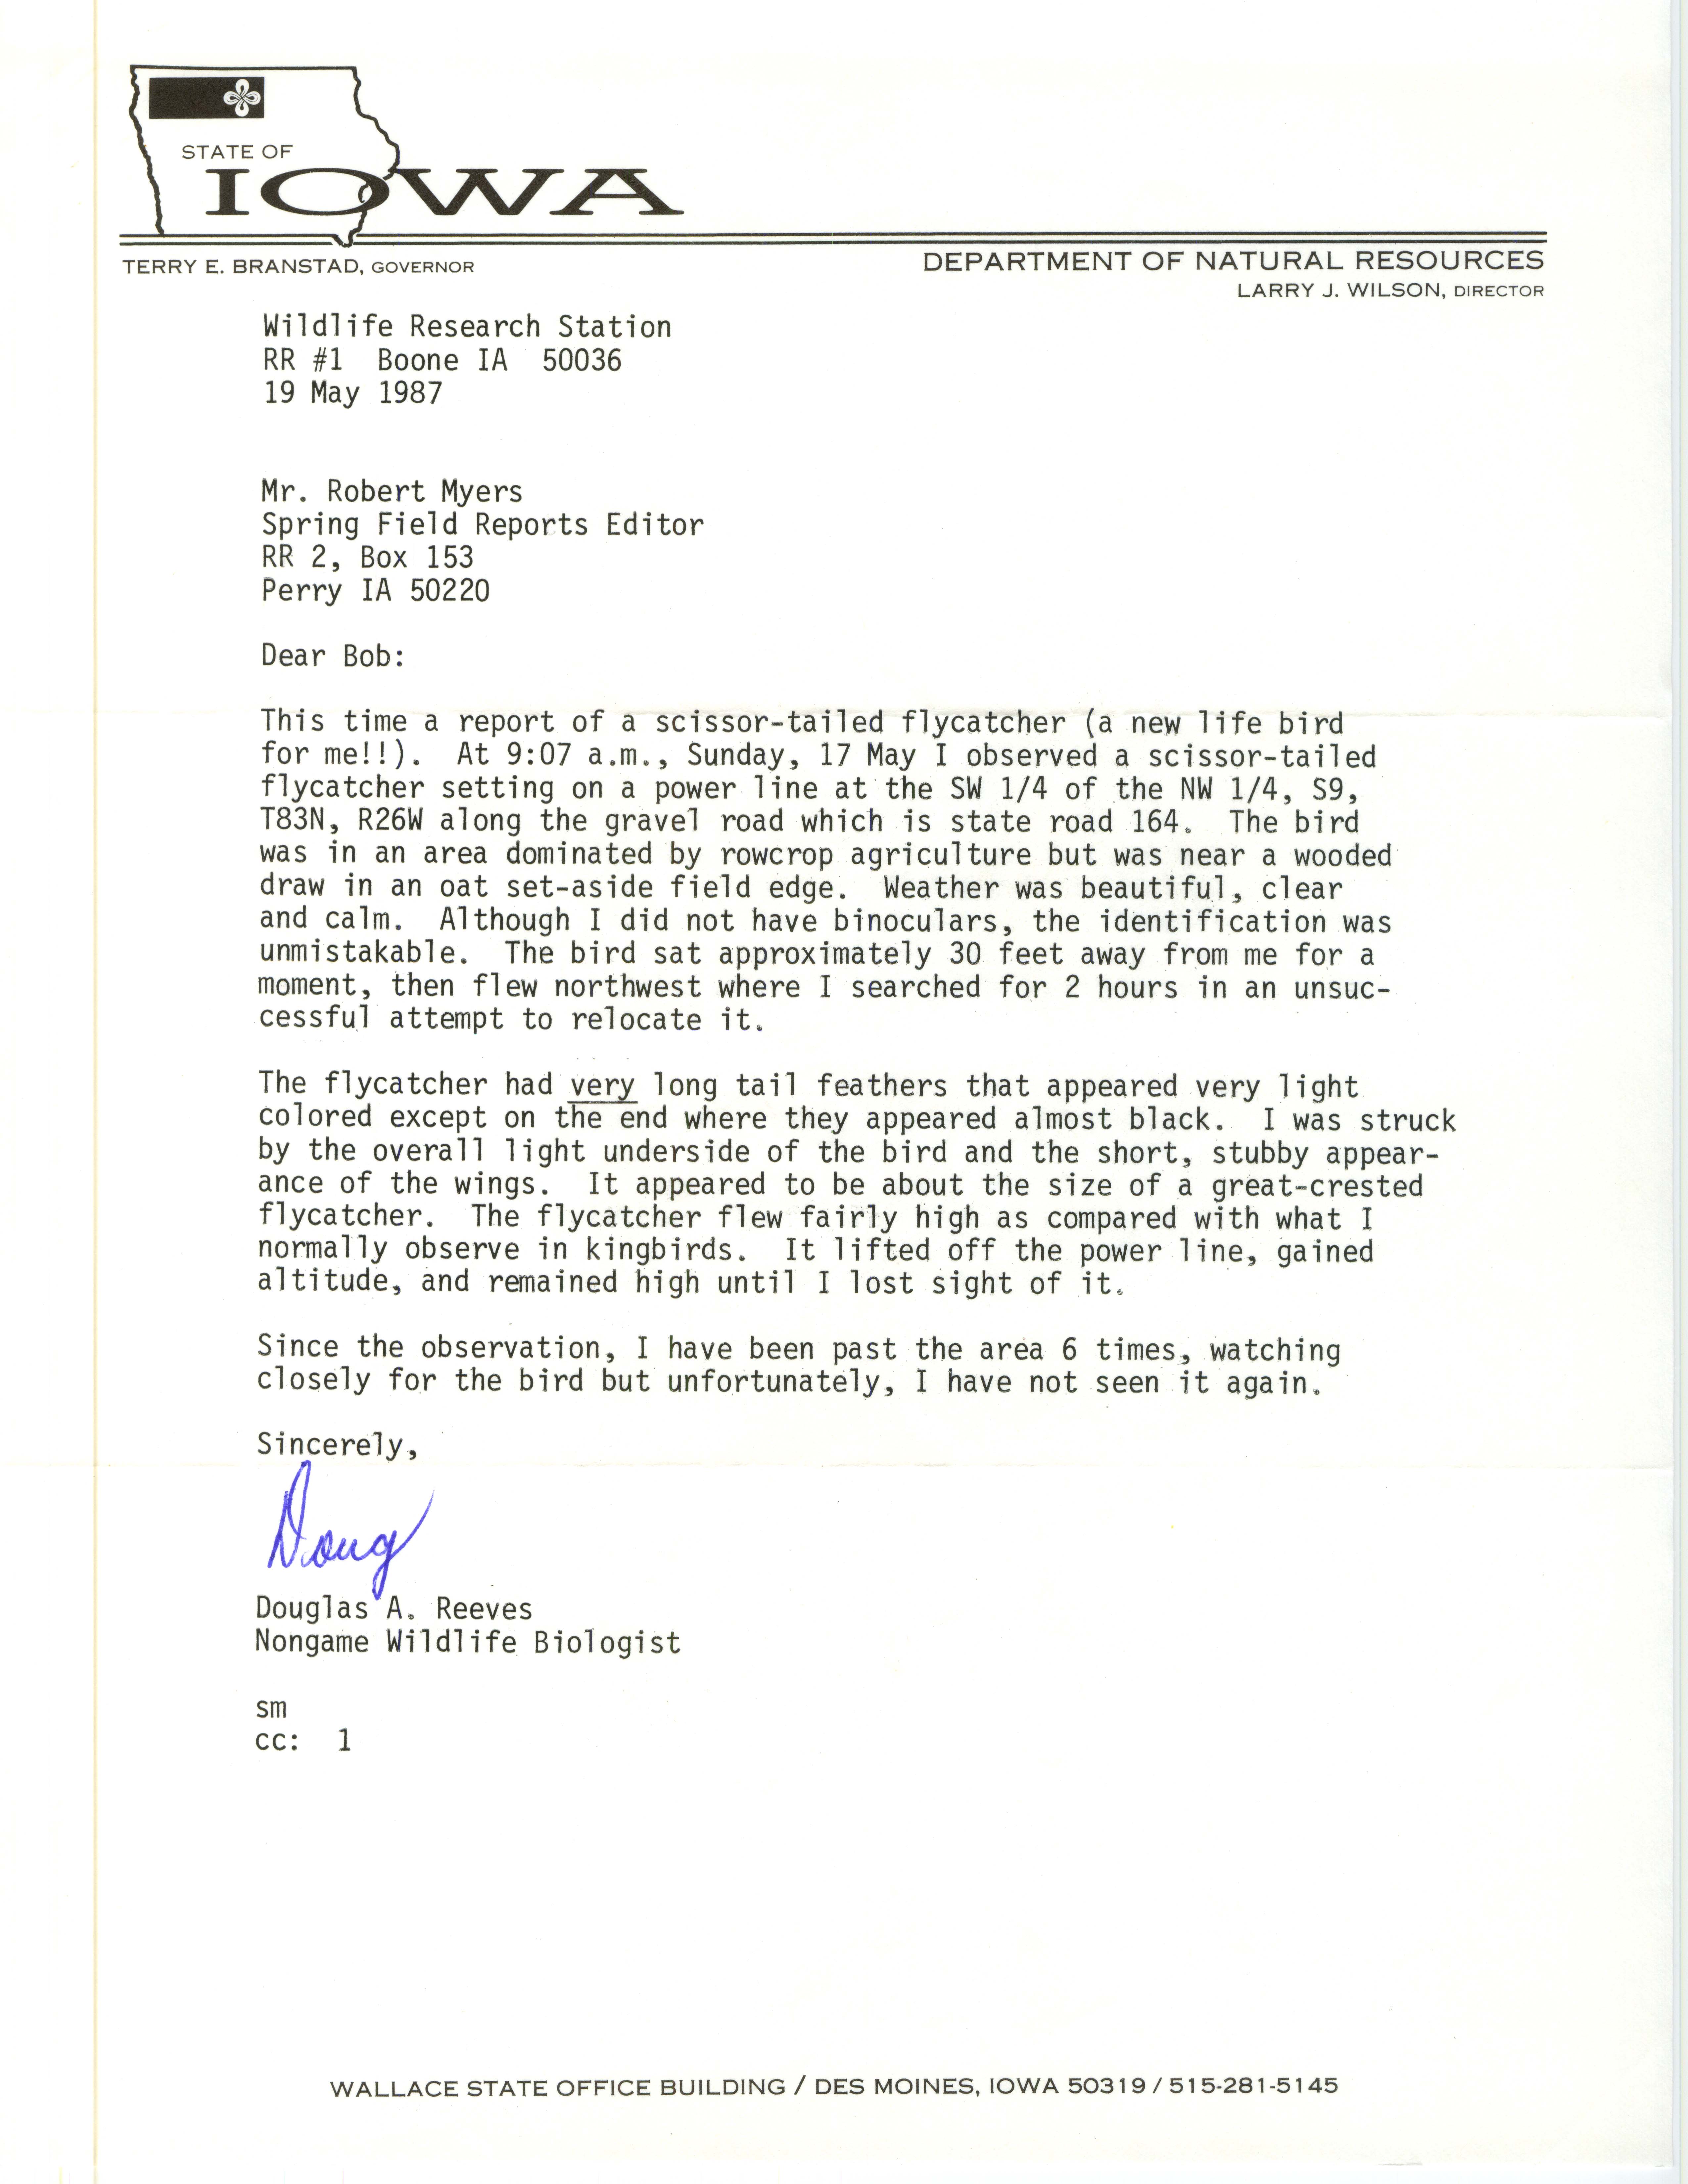 Doug Reeves letter to Robert K. Myers regarding an unusual bird sighting, May 19, 1987